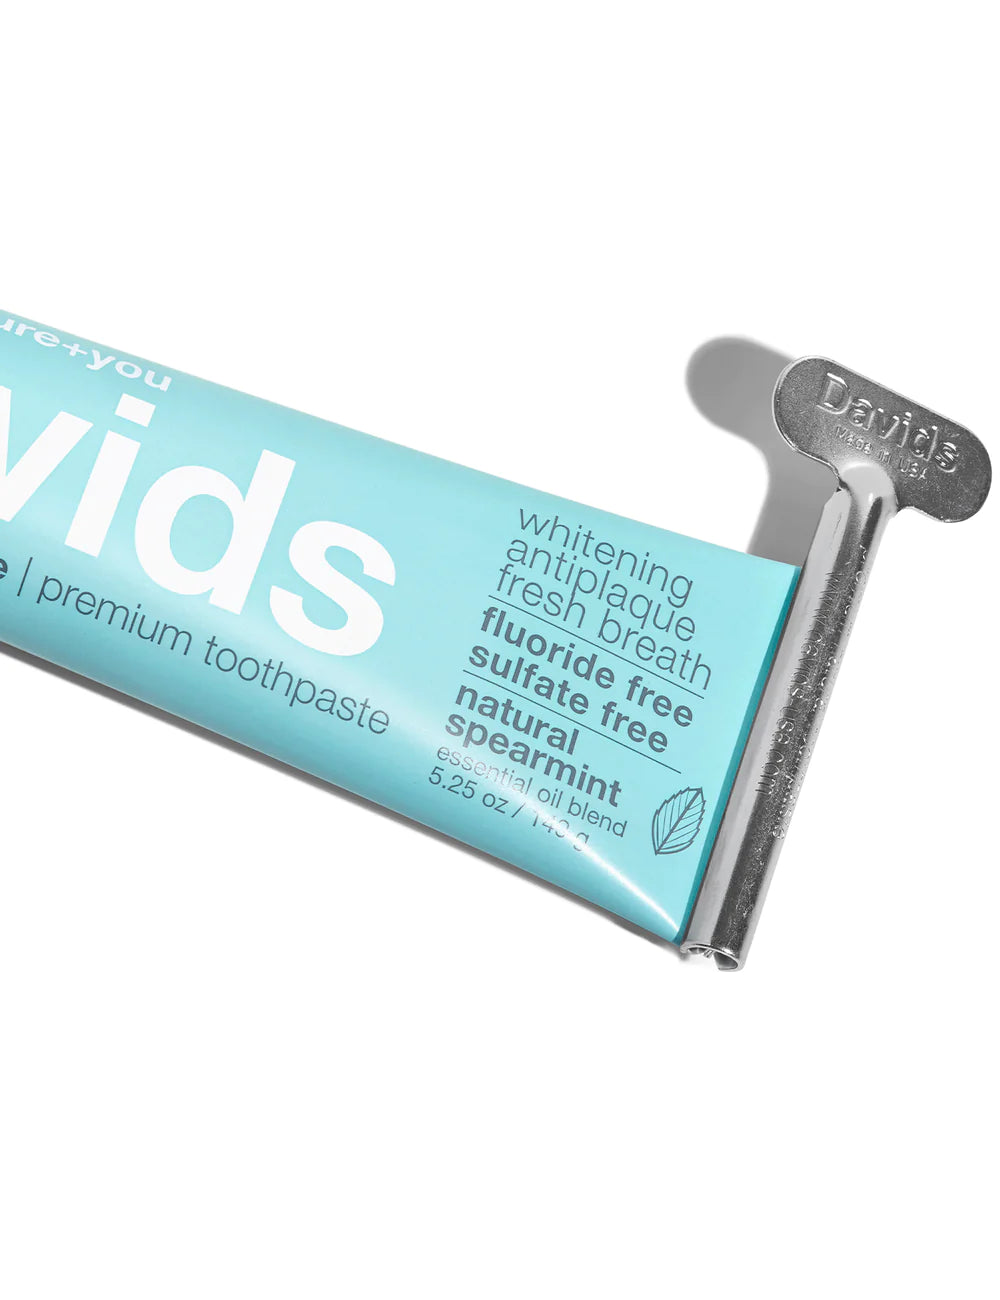 Davids Premium Toothpaste/ Spearmint